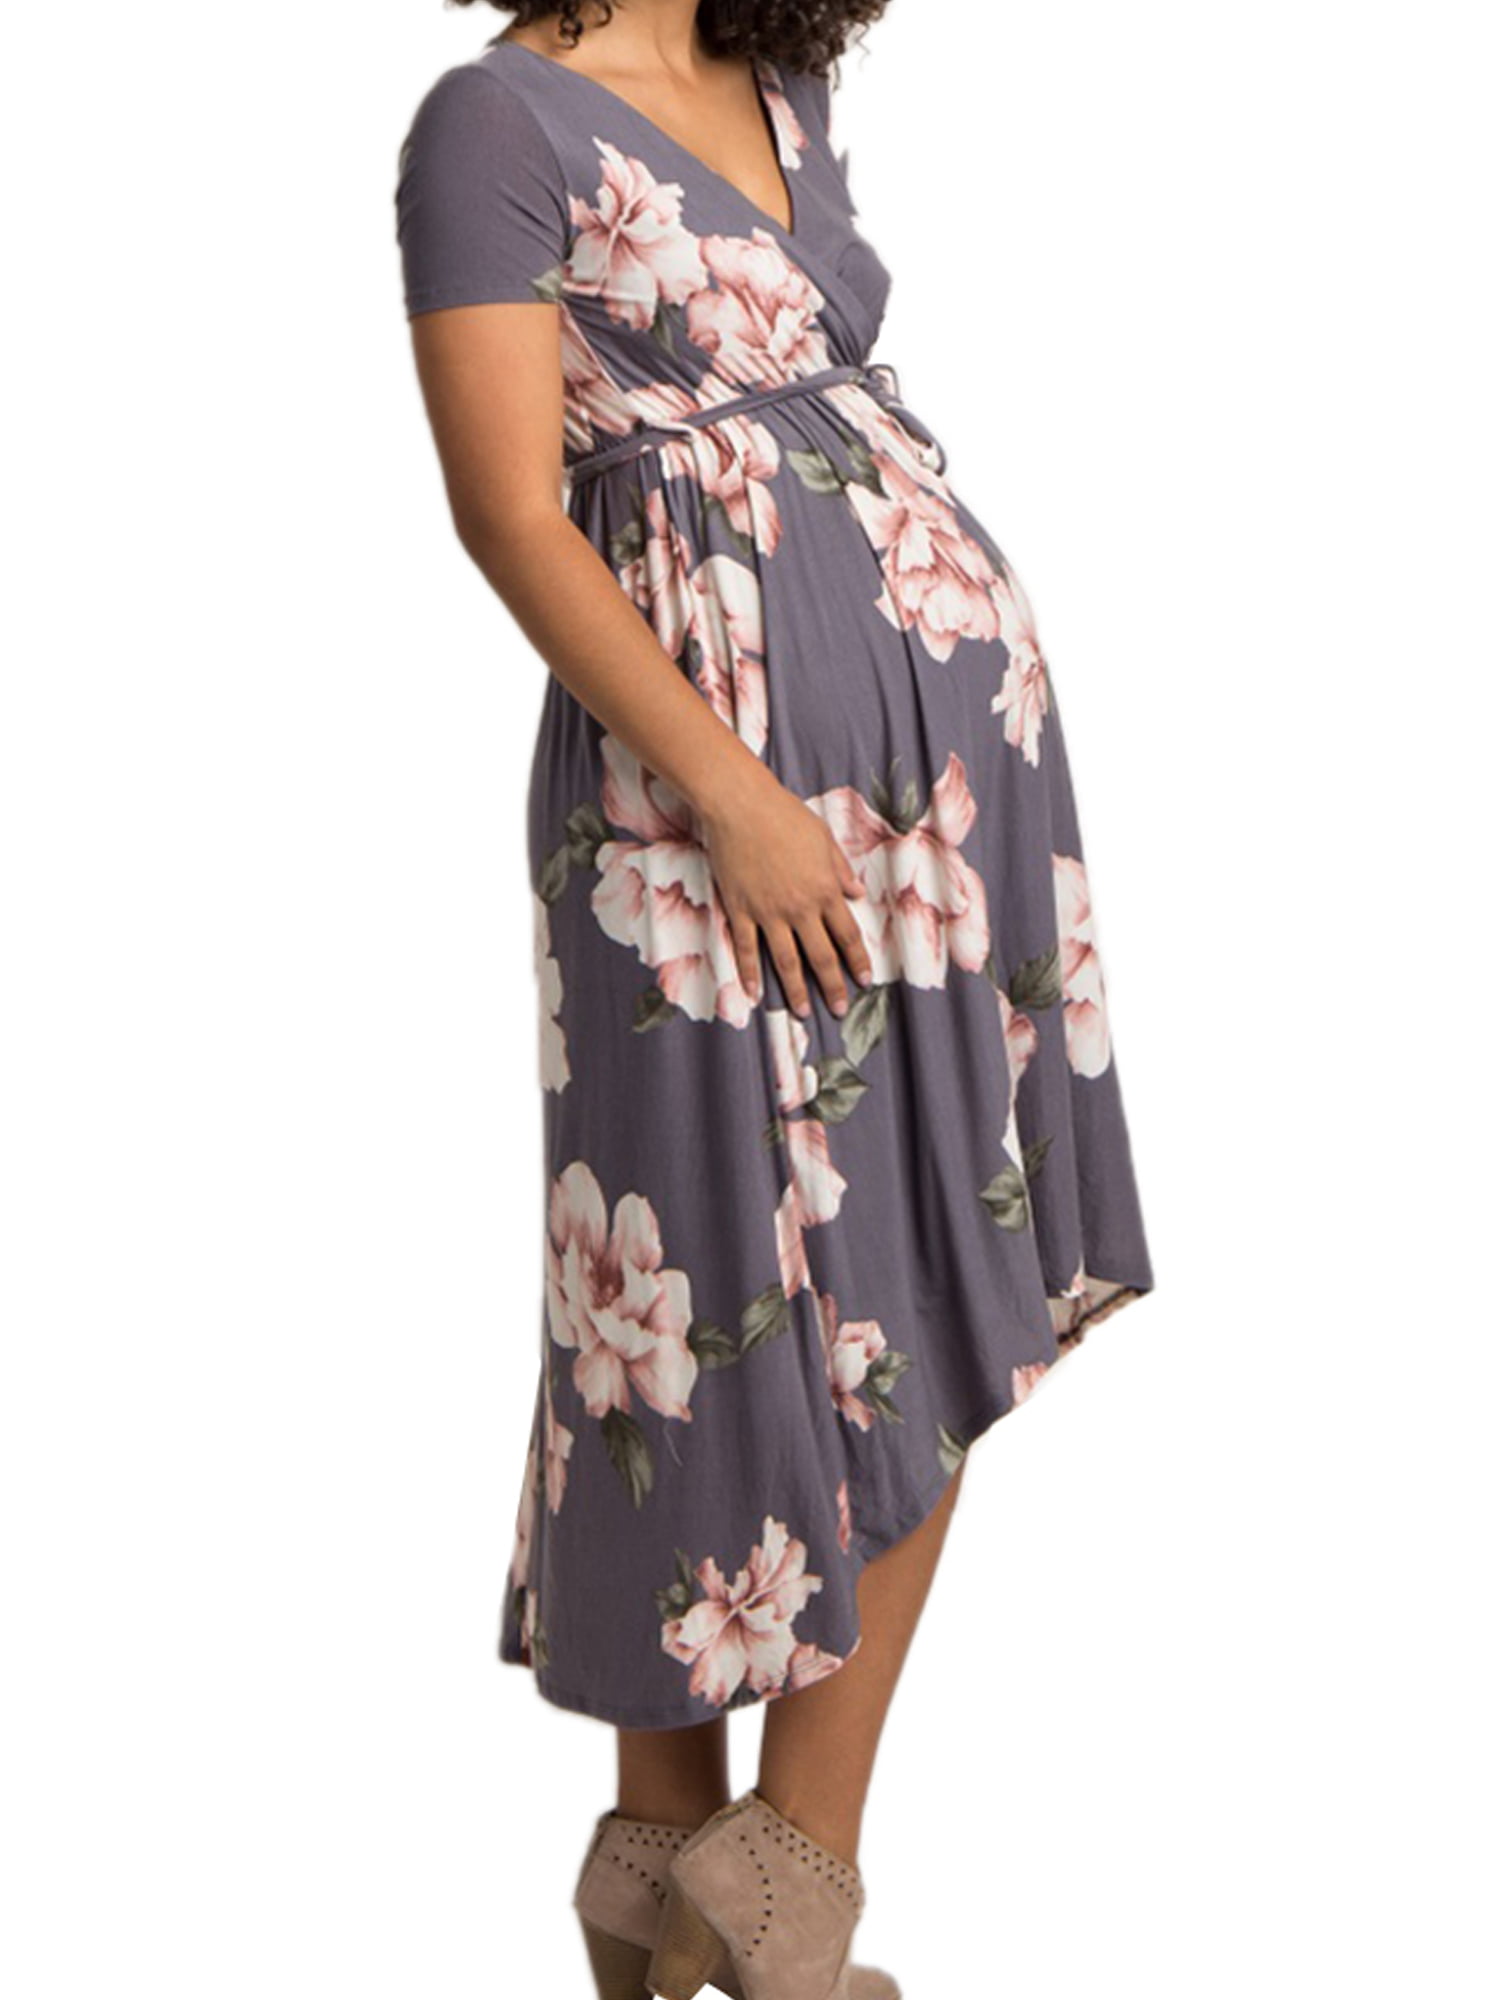 YRD TECH Pregnancy Maternity Flower for Women Sleeveless Pregnancy Clothes 